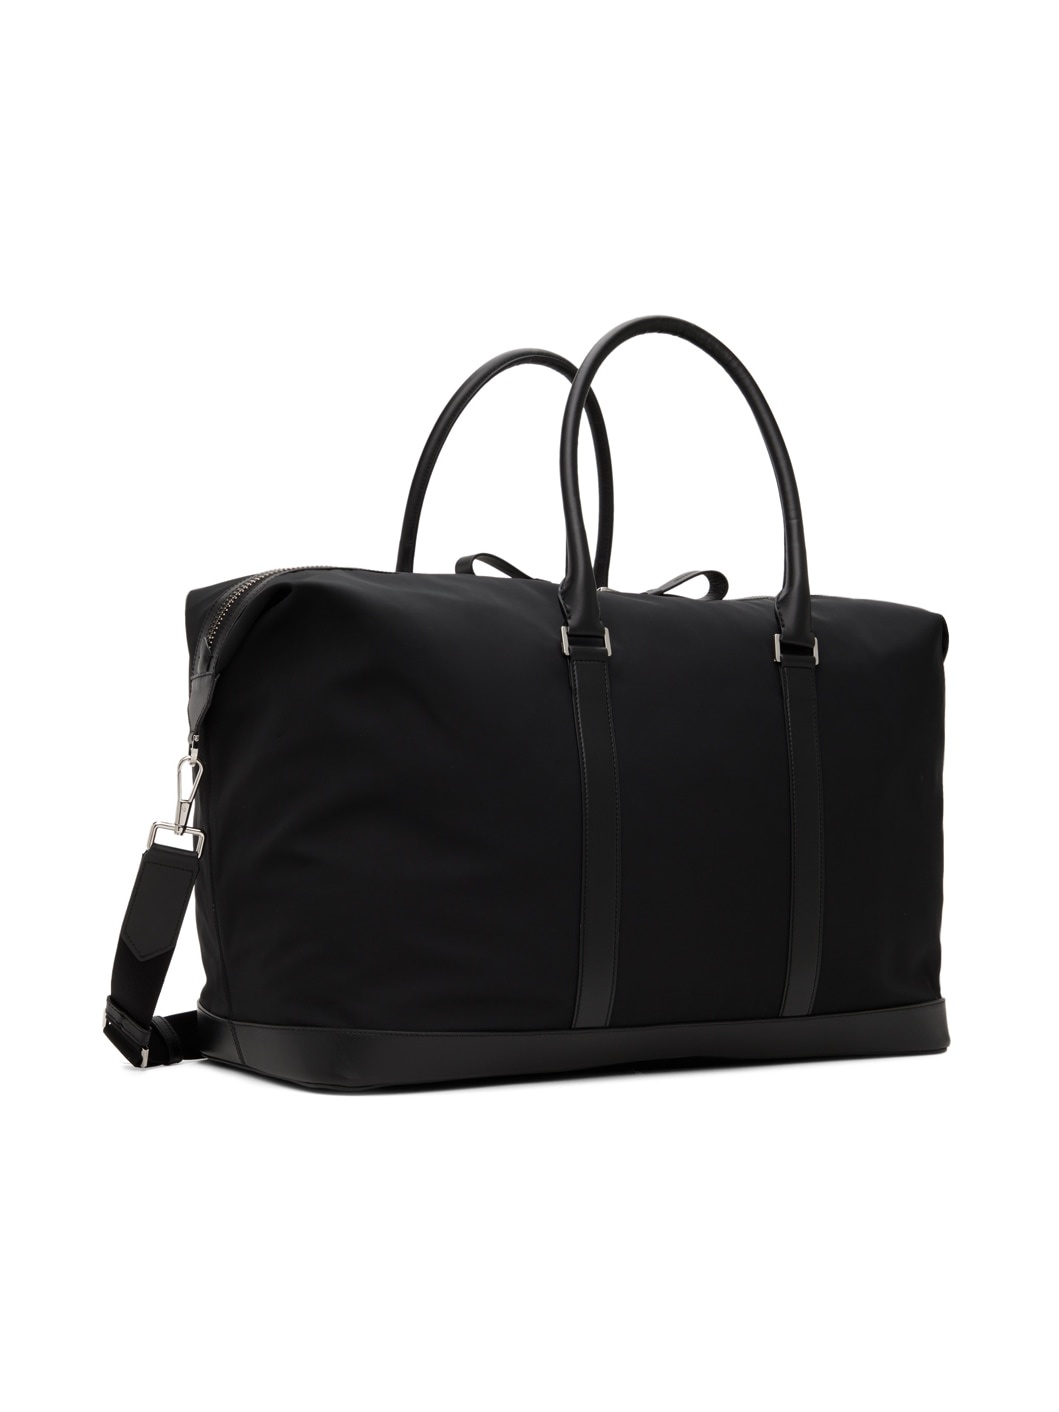 Black Holdall Duffle Bag - 3